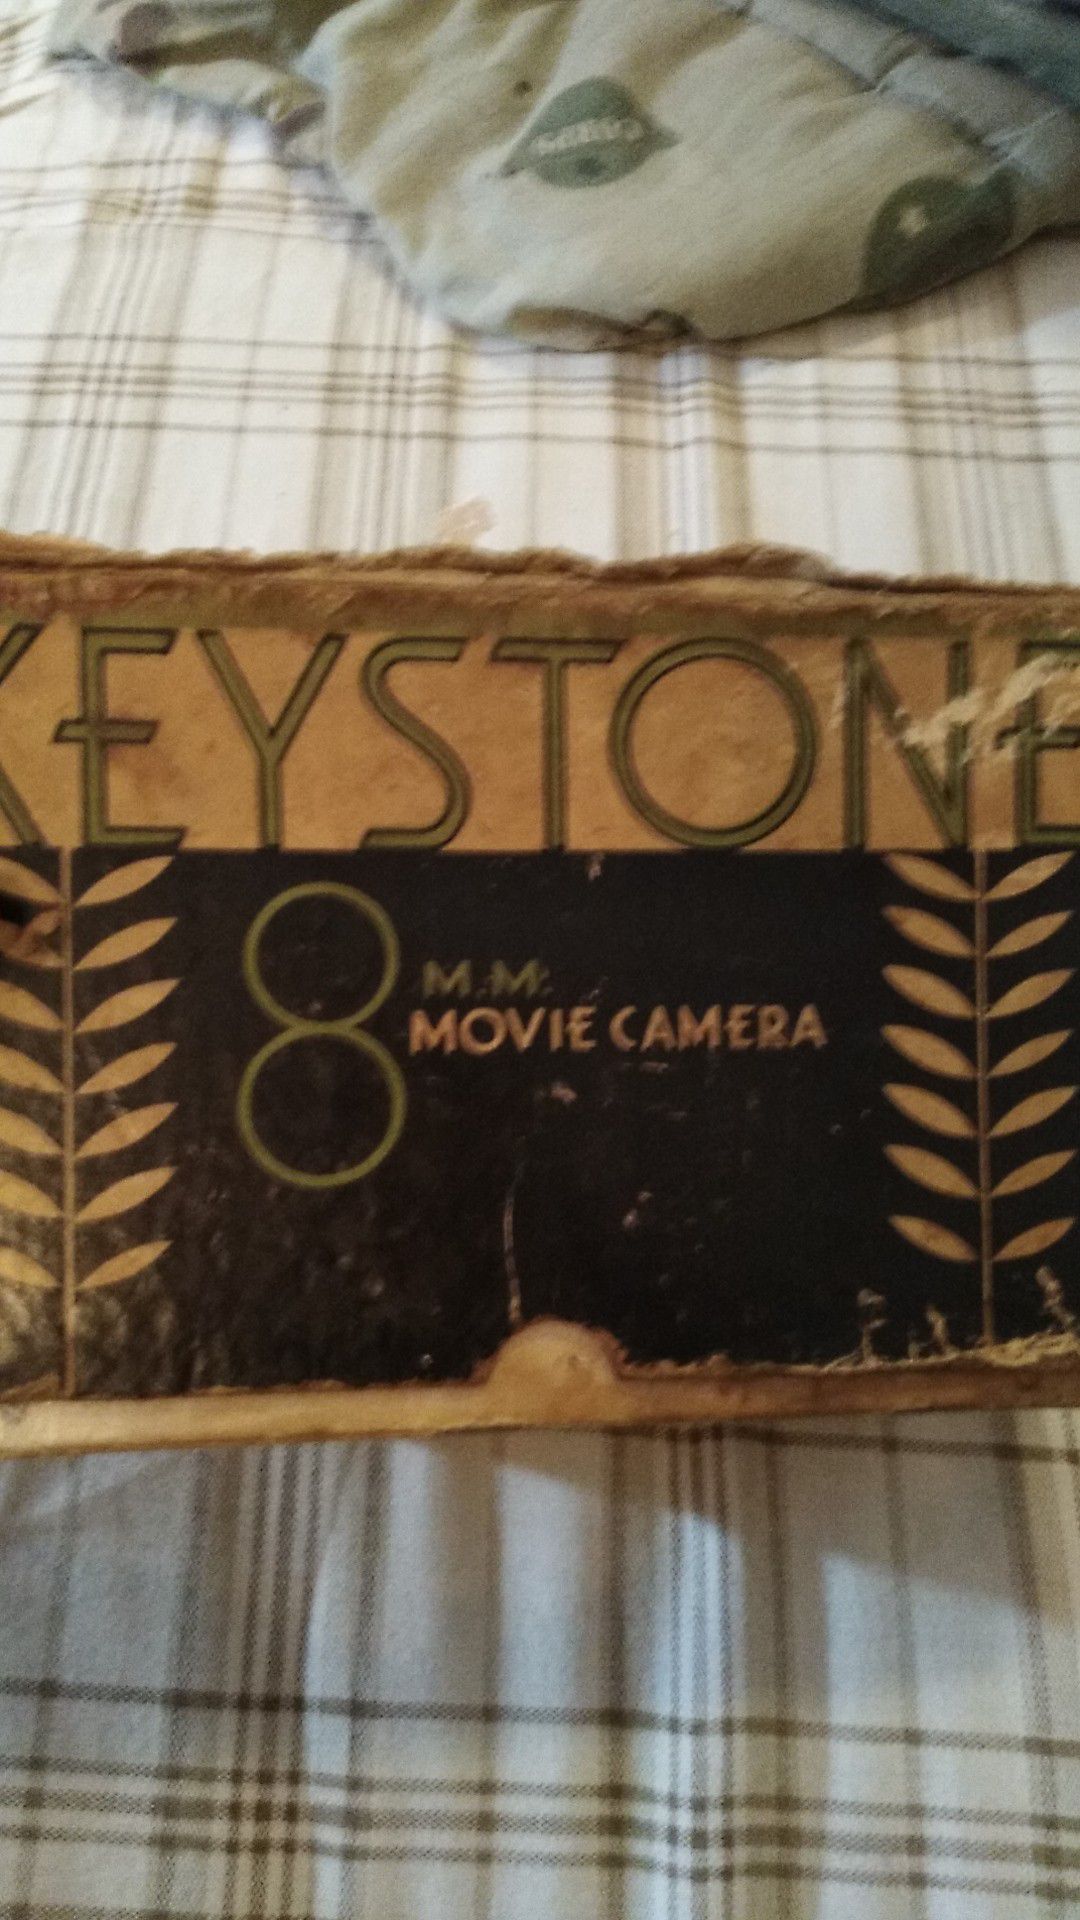 Keystone camera